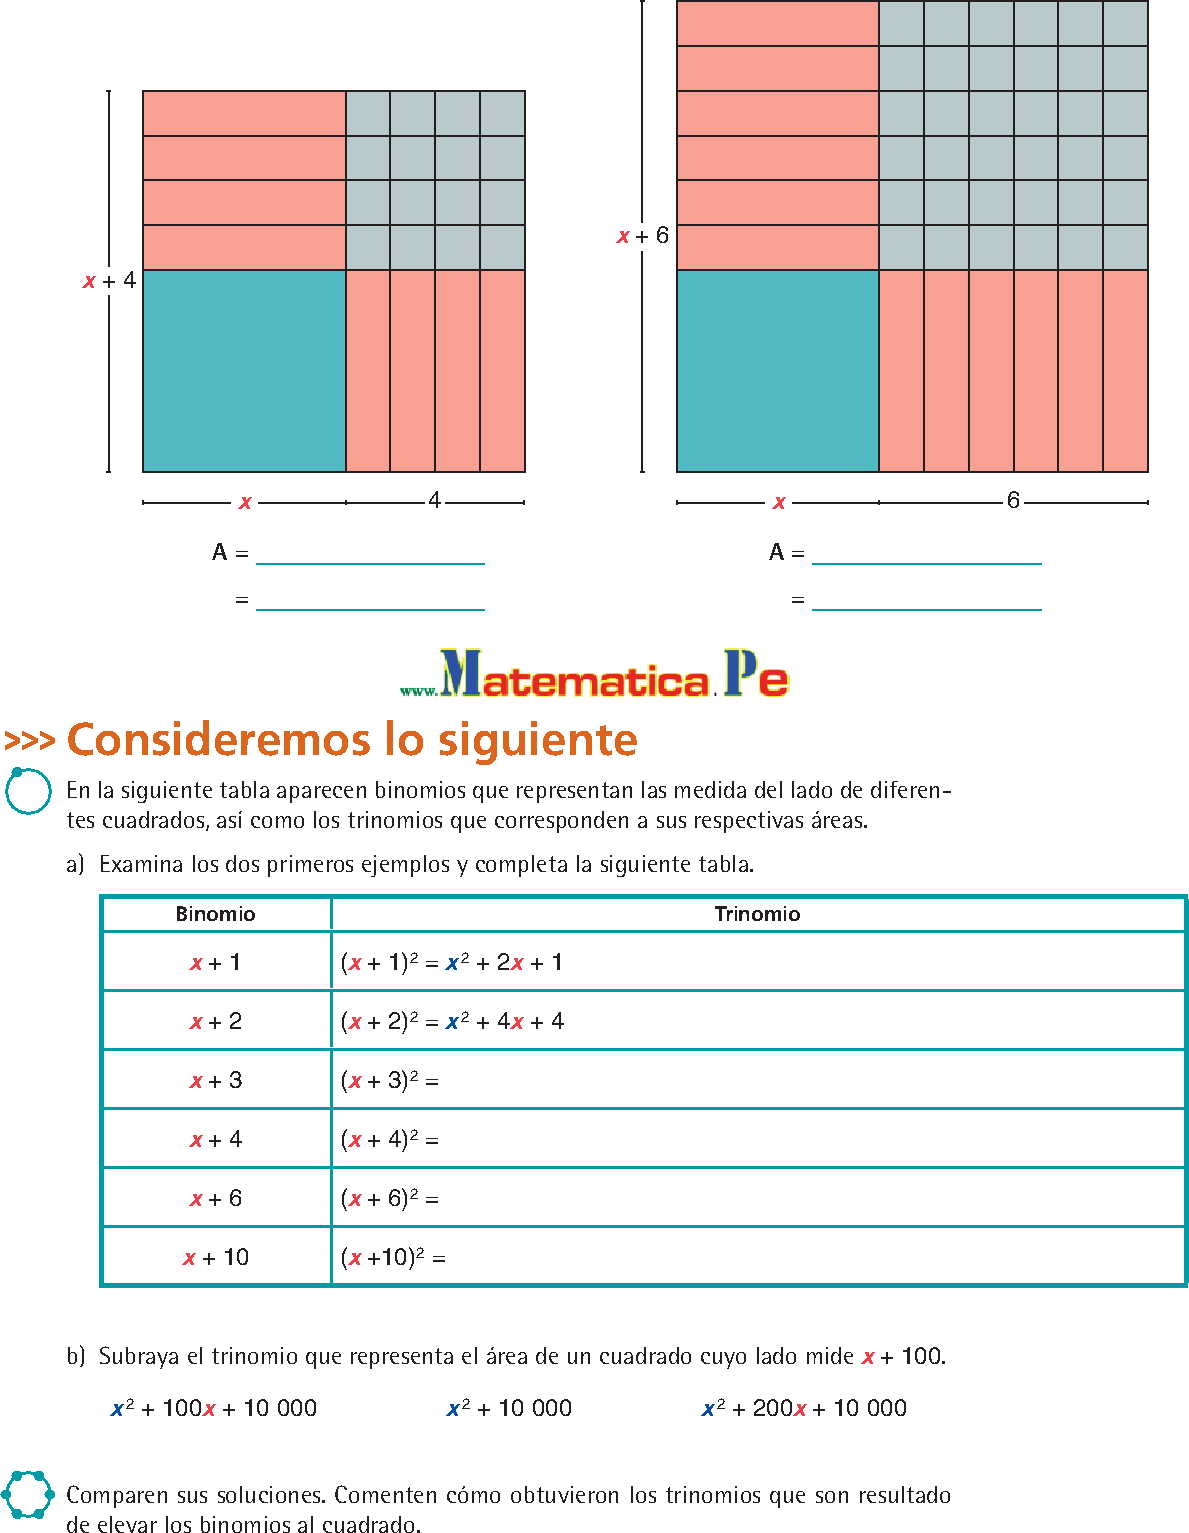 LIBRO DE MATEMATICAS DE TERCERO DE SECUNDARIA PDF